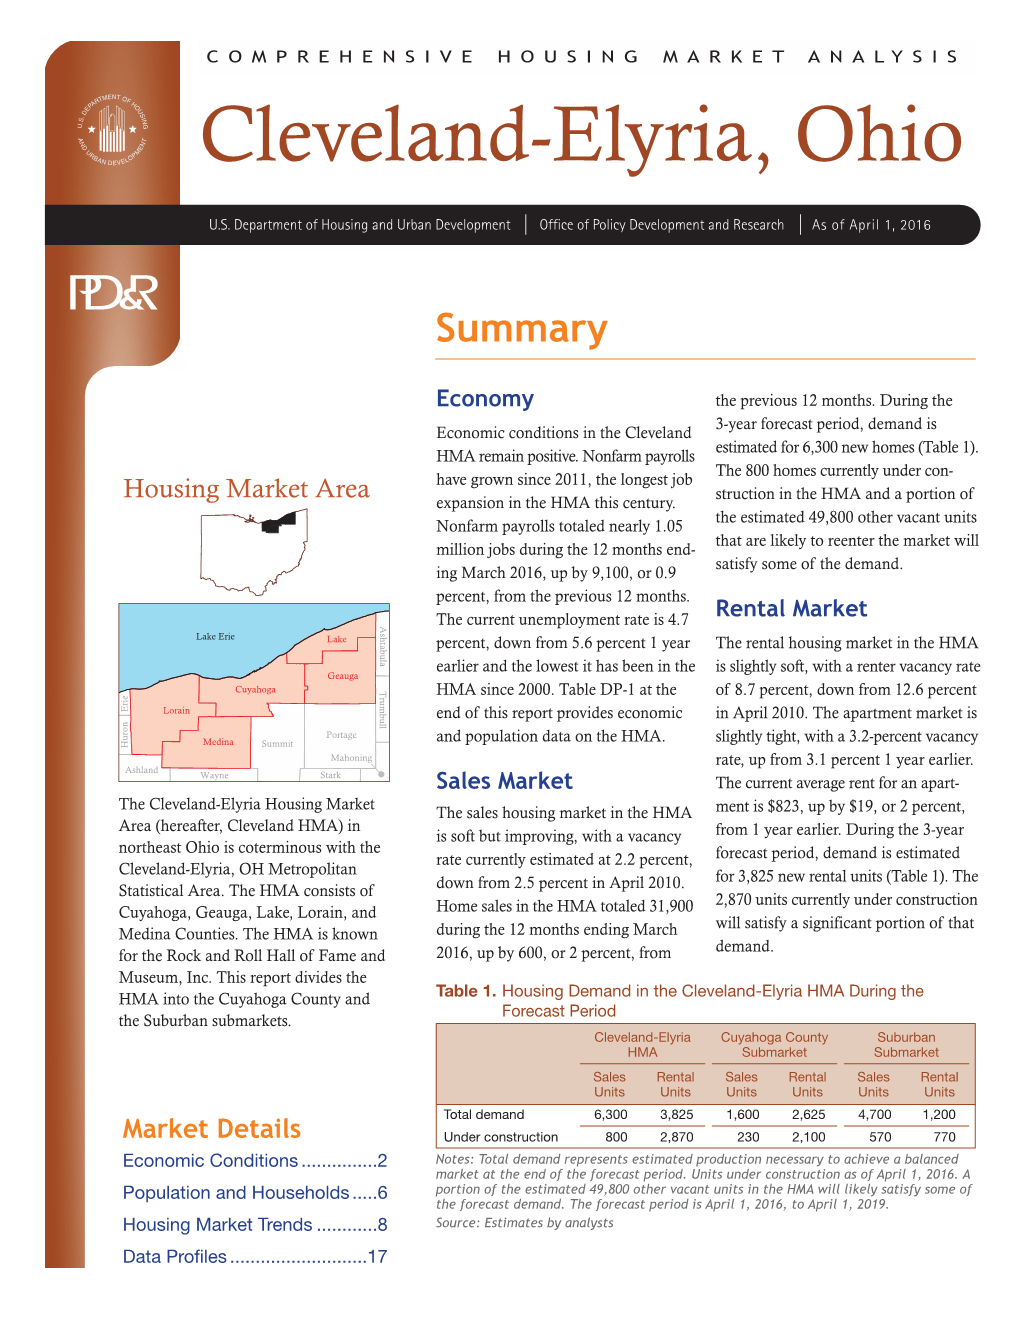 Comprehensive Housing Market Analysis for Cleveland-Elyria, Ohio